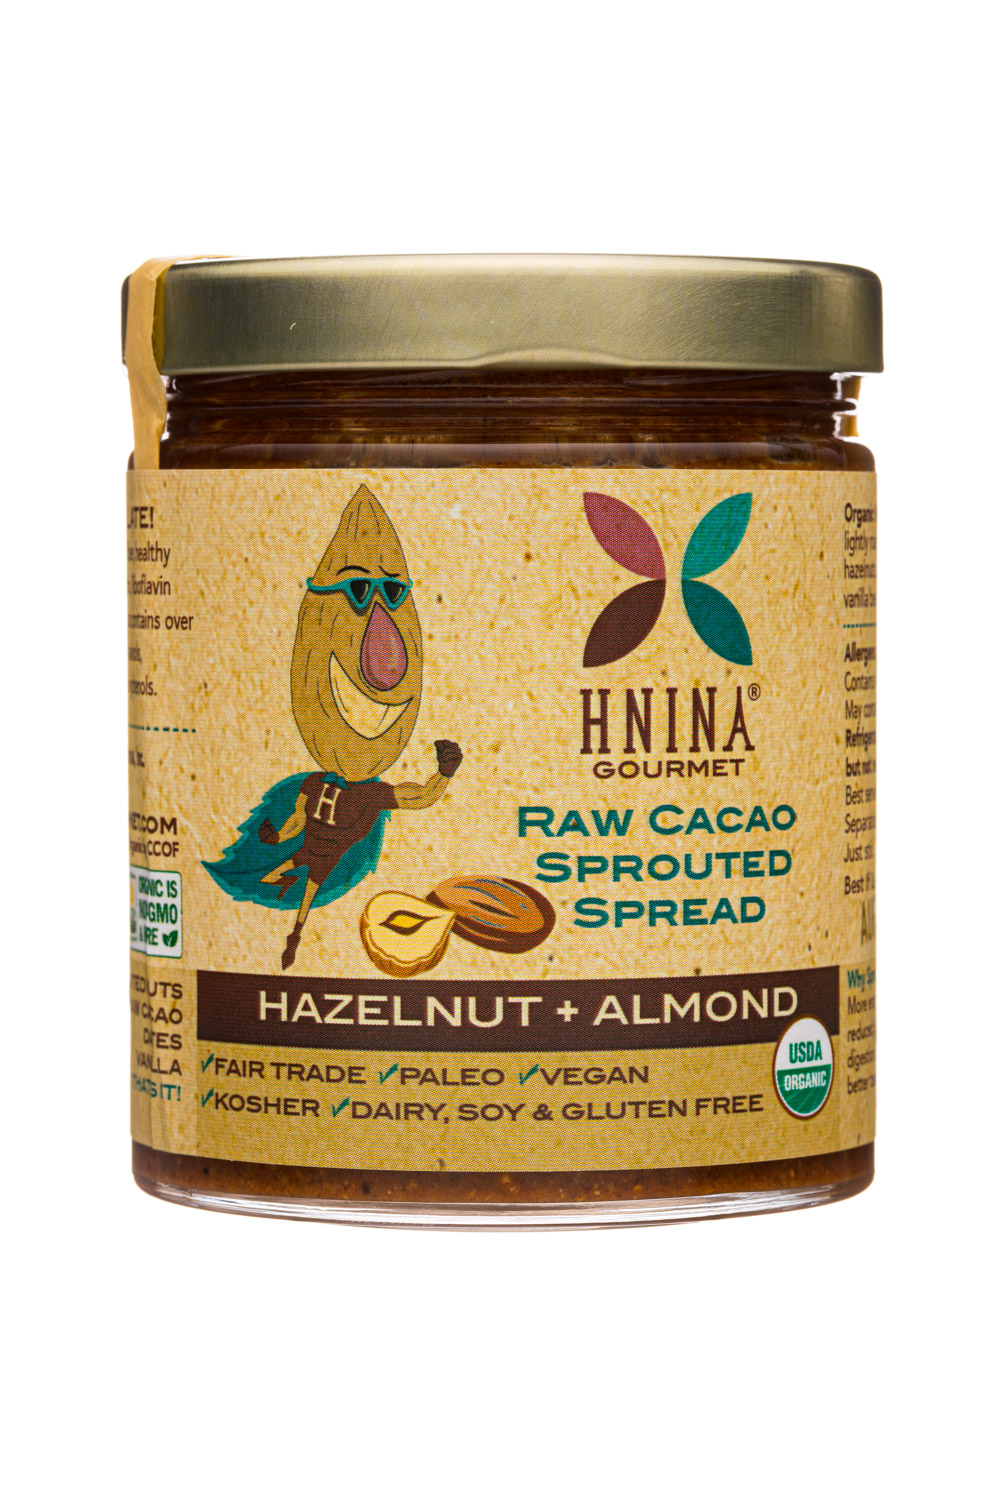 Raw Cacao Sprouted Spread - Hazelnut + Almond